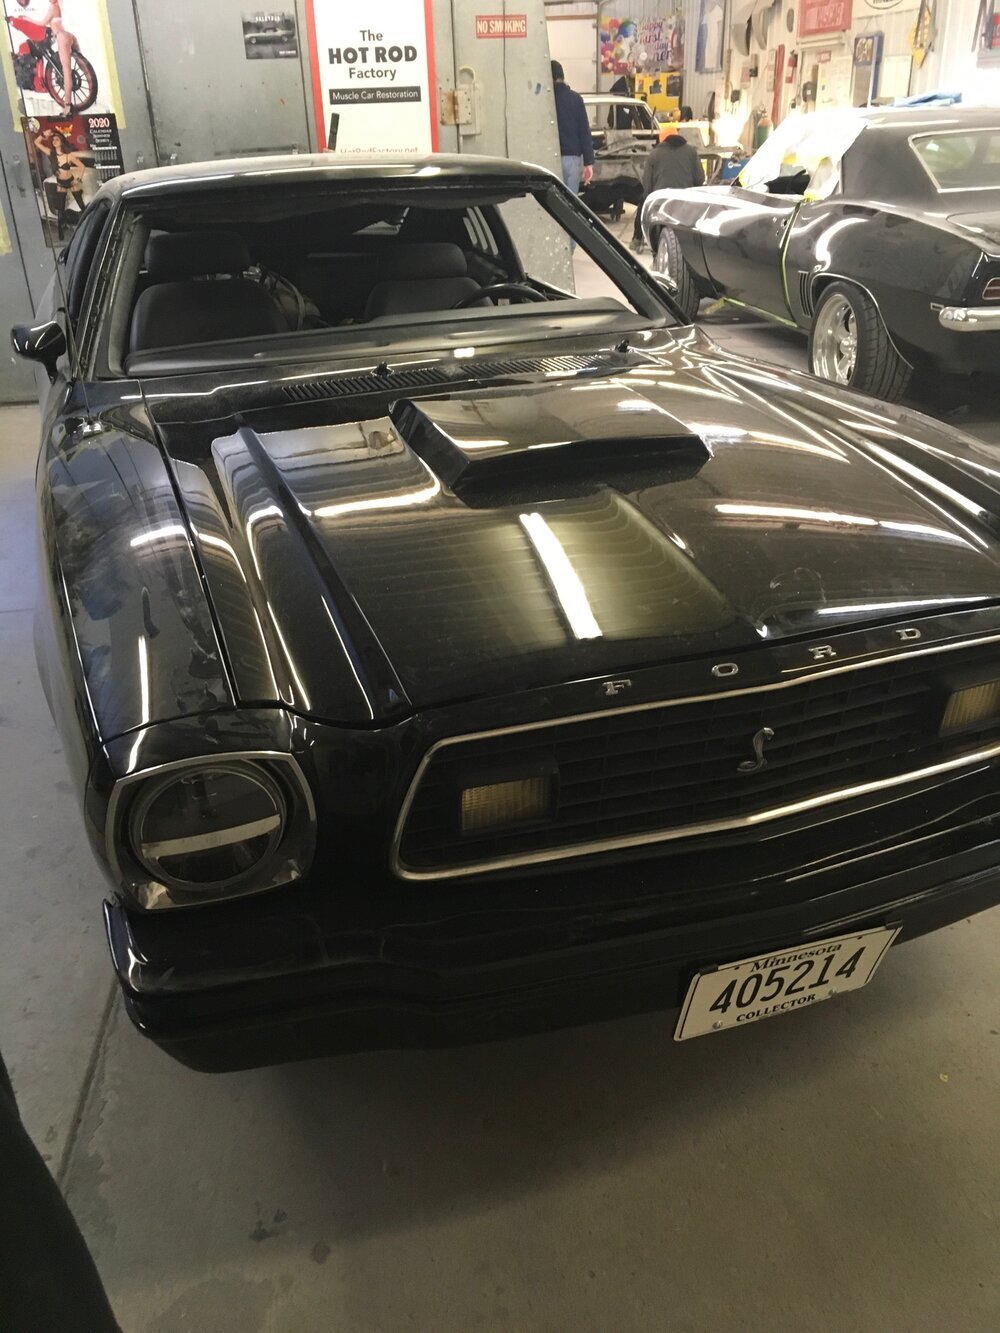 1976-Mustang-car-restoration-hot-rod-factory-cars-rebuild (2).jpeg